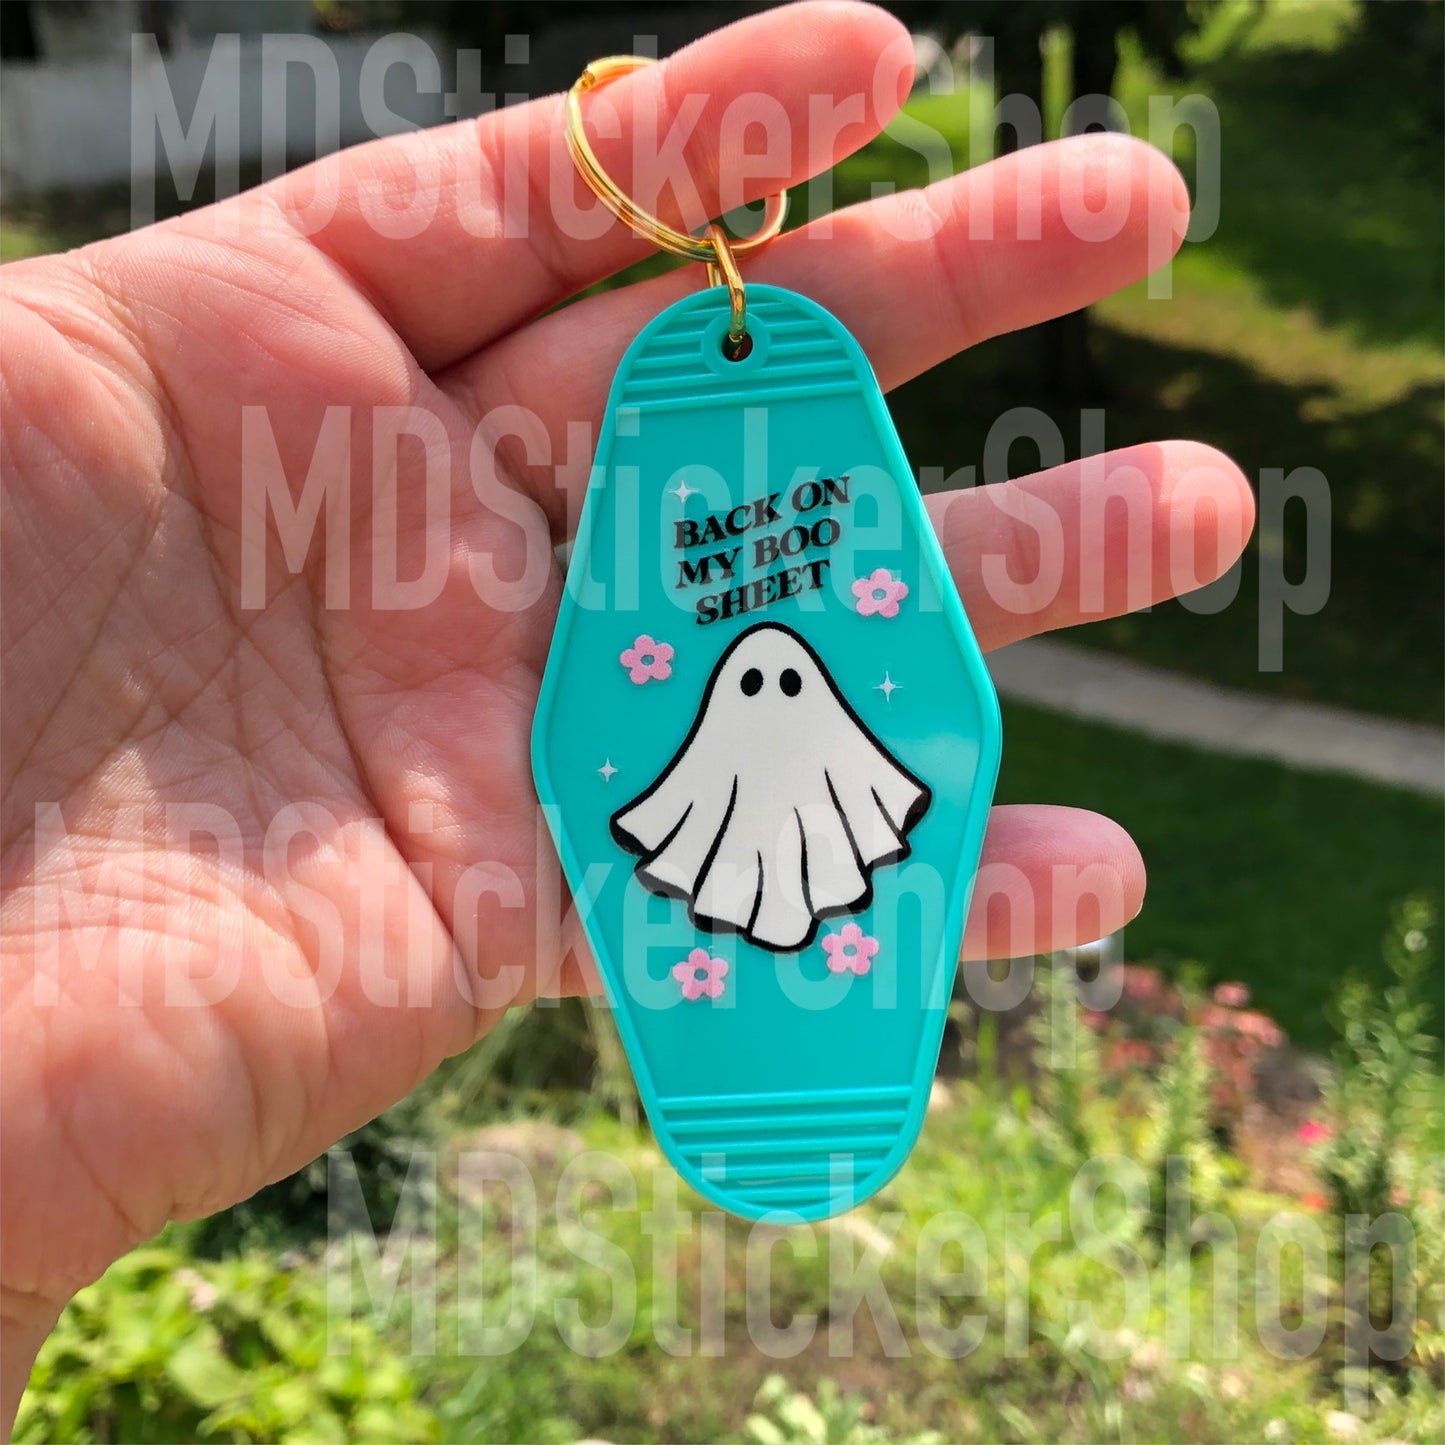 Back On My Boo Sheet Ghost Teal Hotel Keychain, Acrylic Keychain